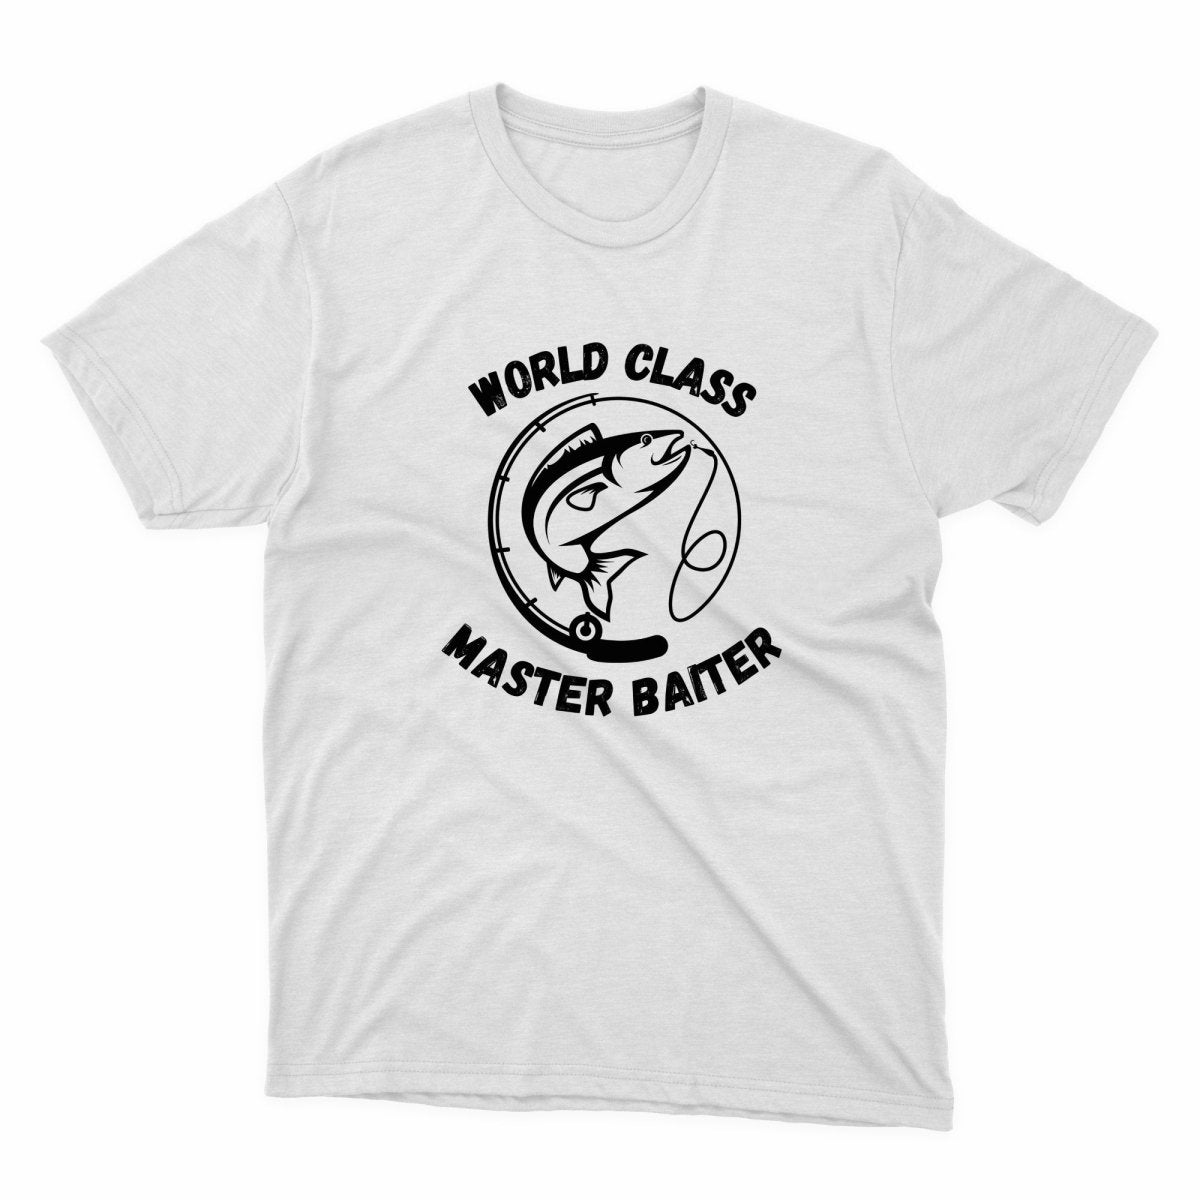 Master Baiter Fish Shirt - stickerbullMaster Baiter Fish ShirtShirtsPrintifystickerbull46280448009833456245WhiteSa white t - shirt that says world class master batter